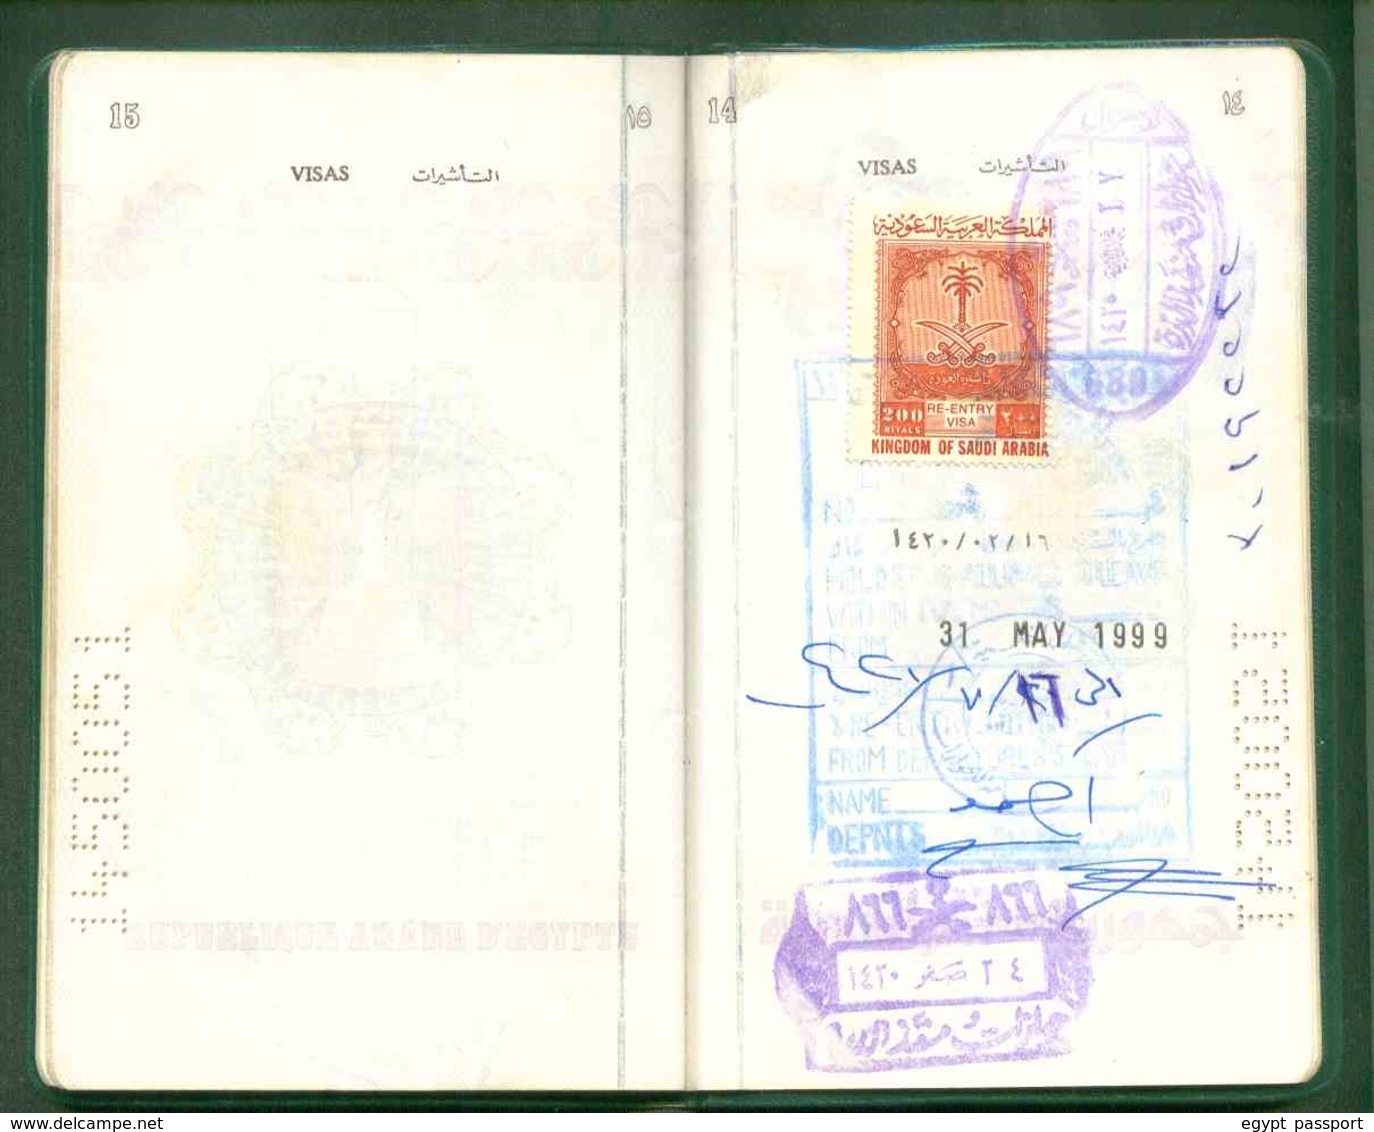 Egypt Passport Issue 1997 - Visa Saudi Arabia - Condition as in scan